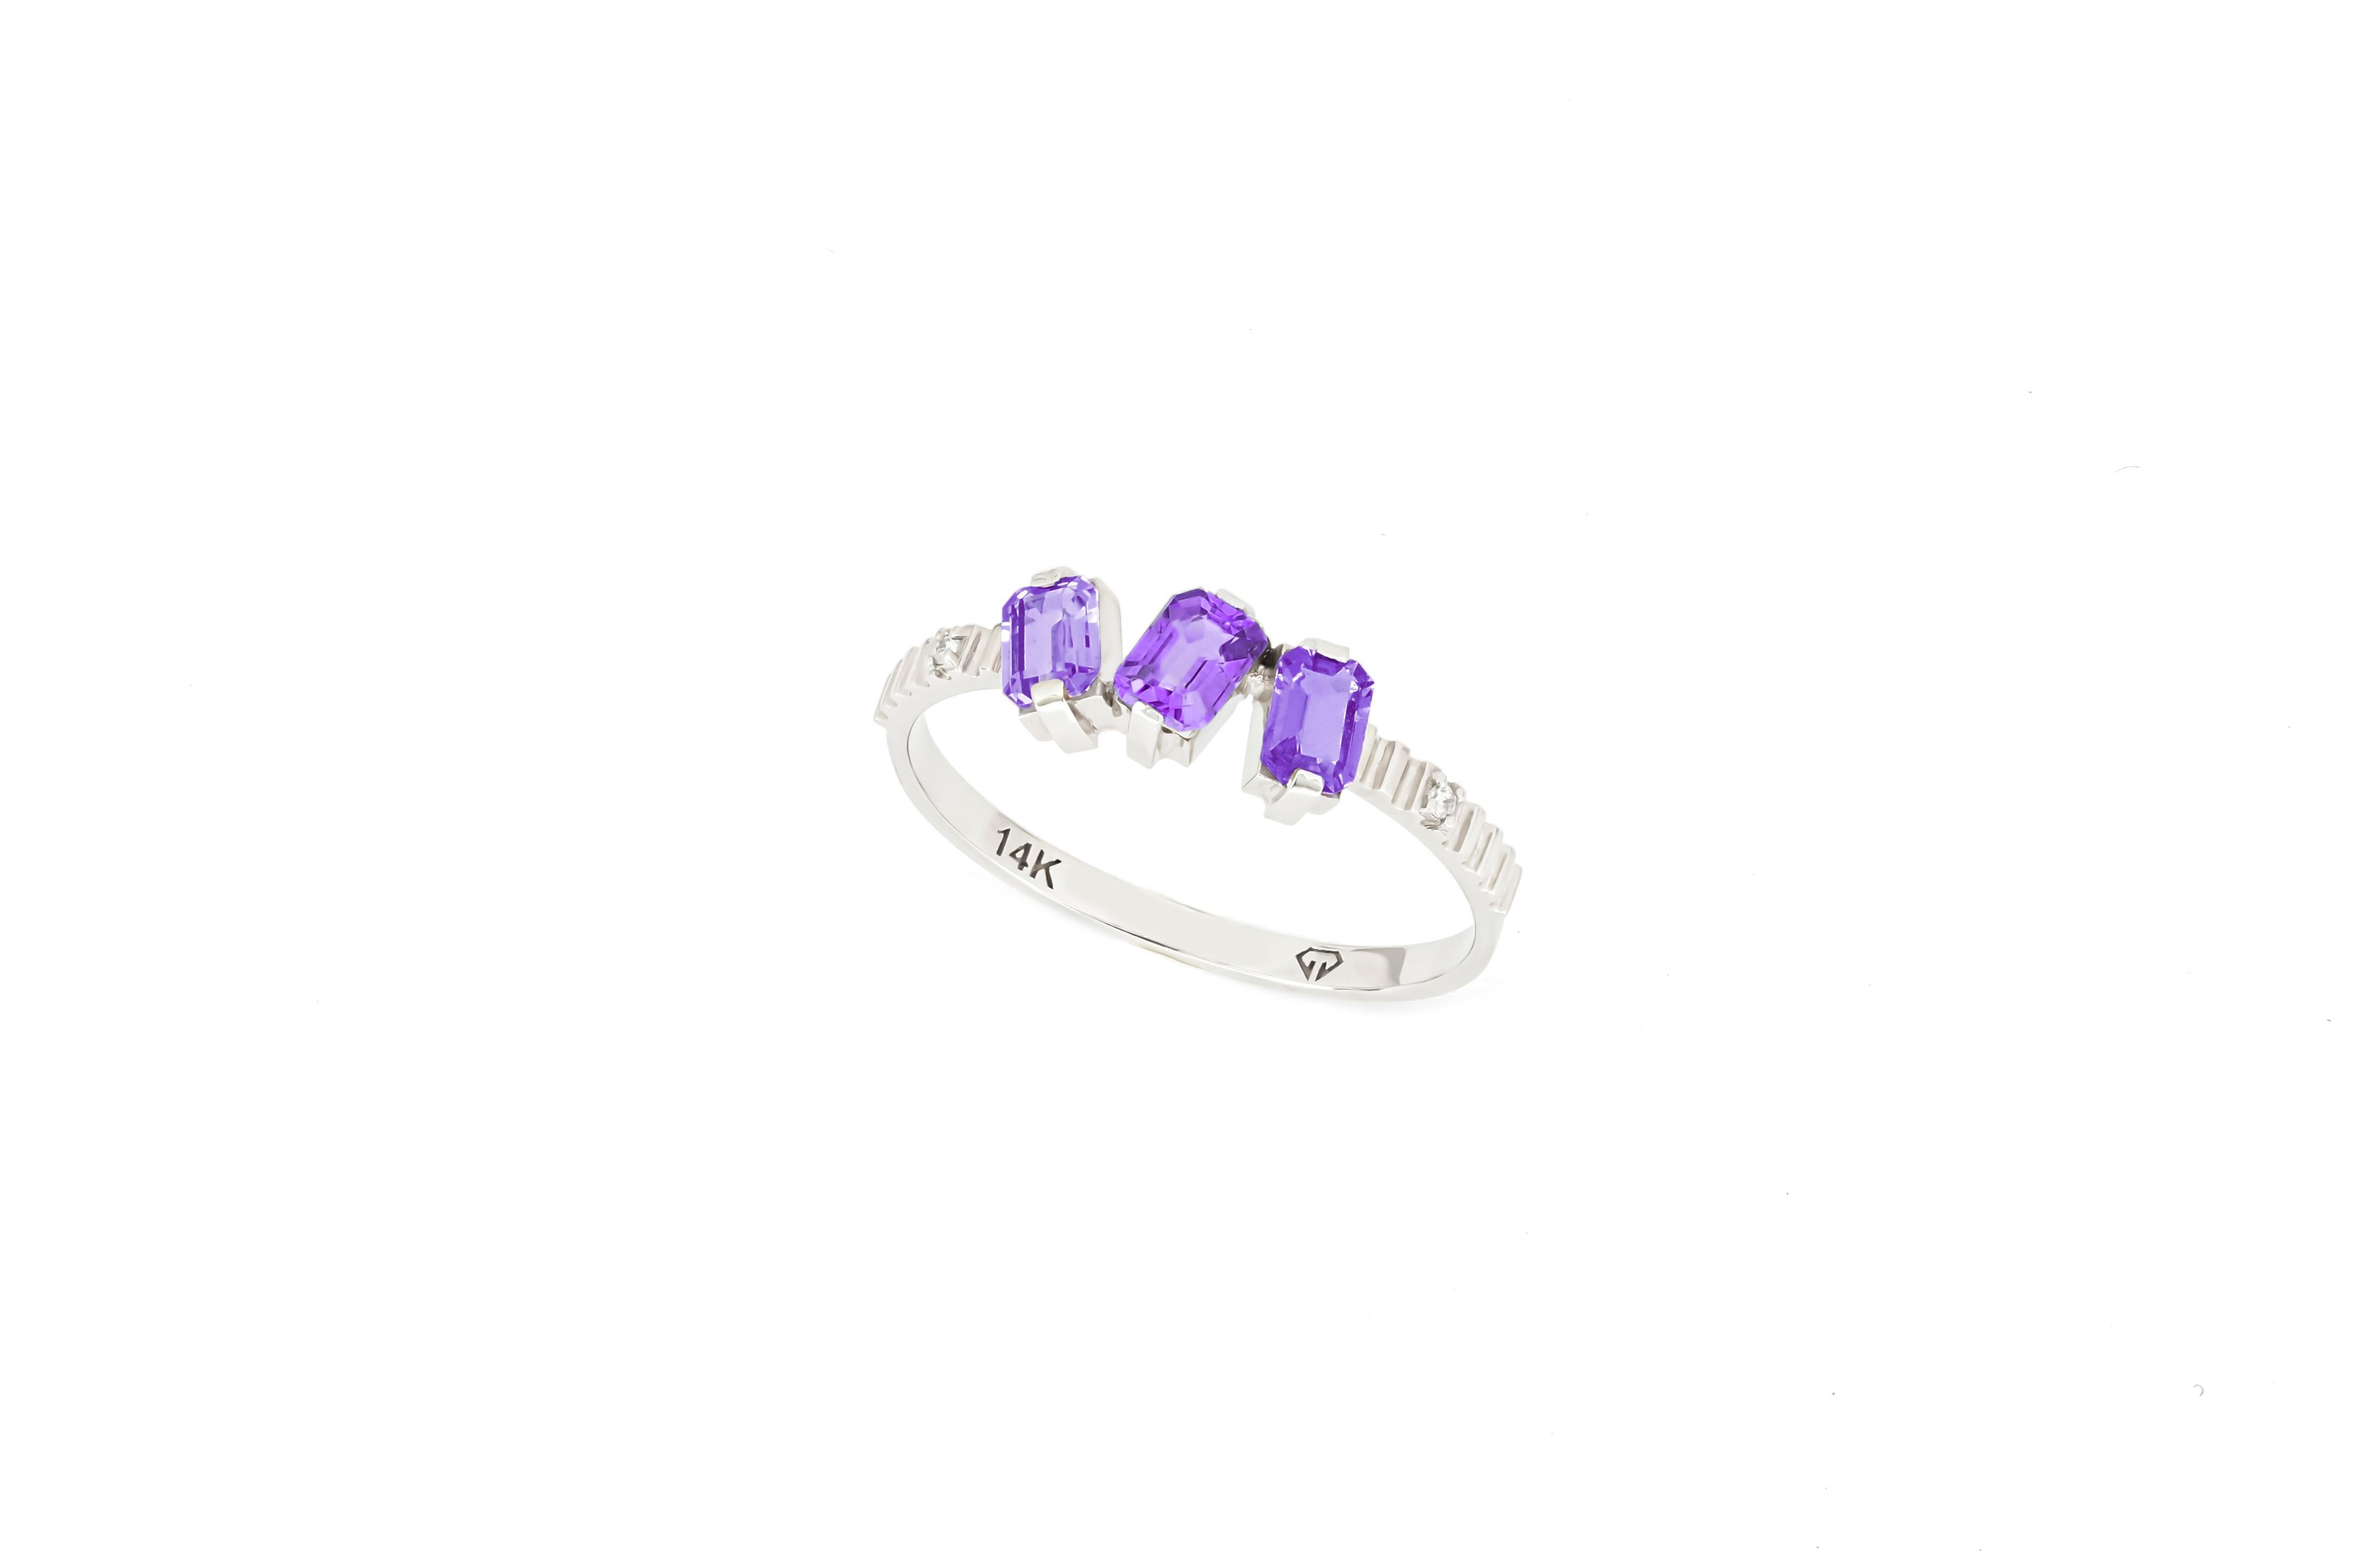 For Sale:  Monochrome purple gemstone 14k ring.  7